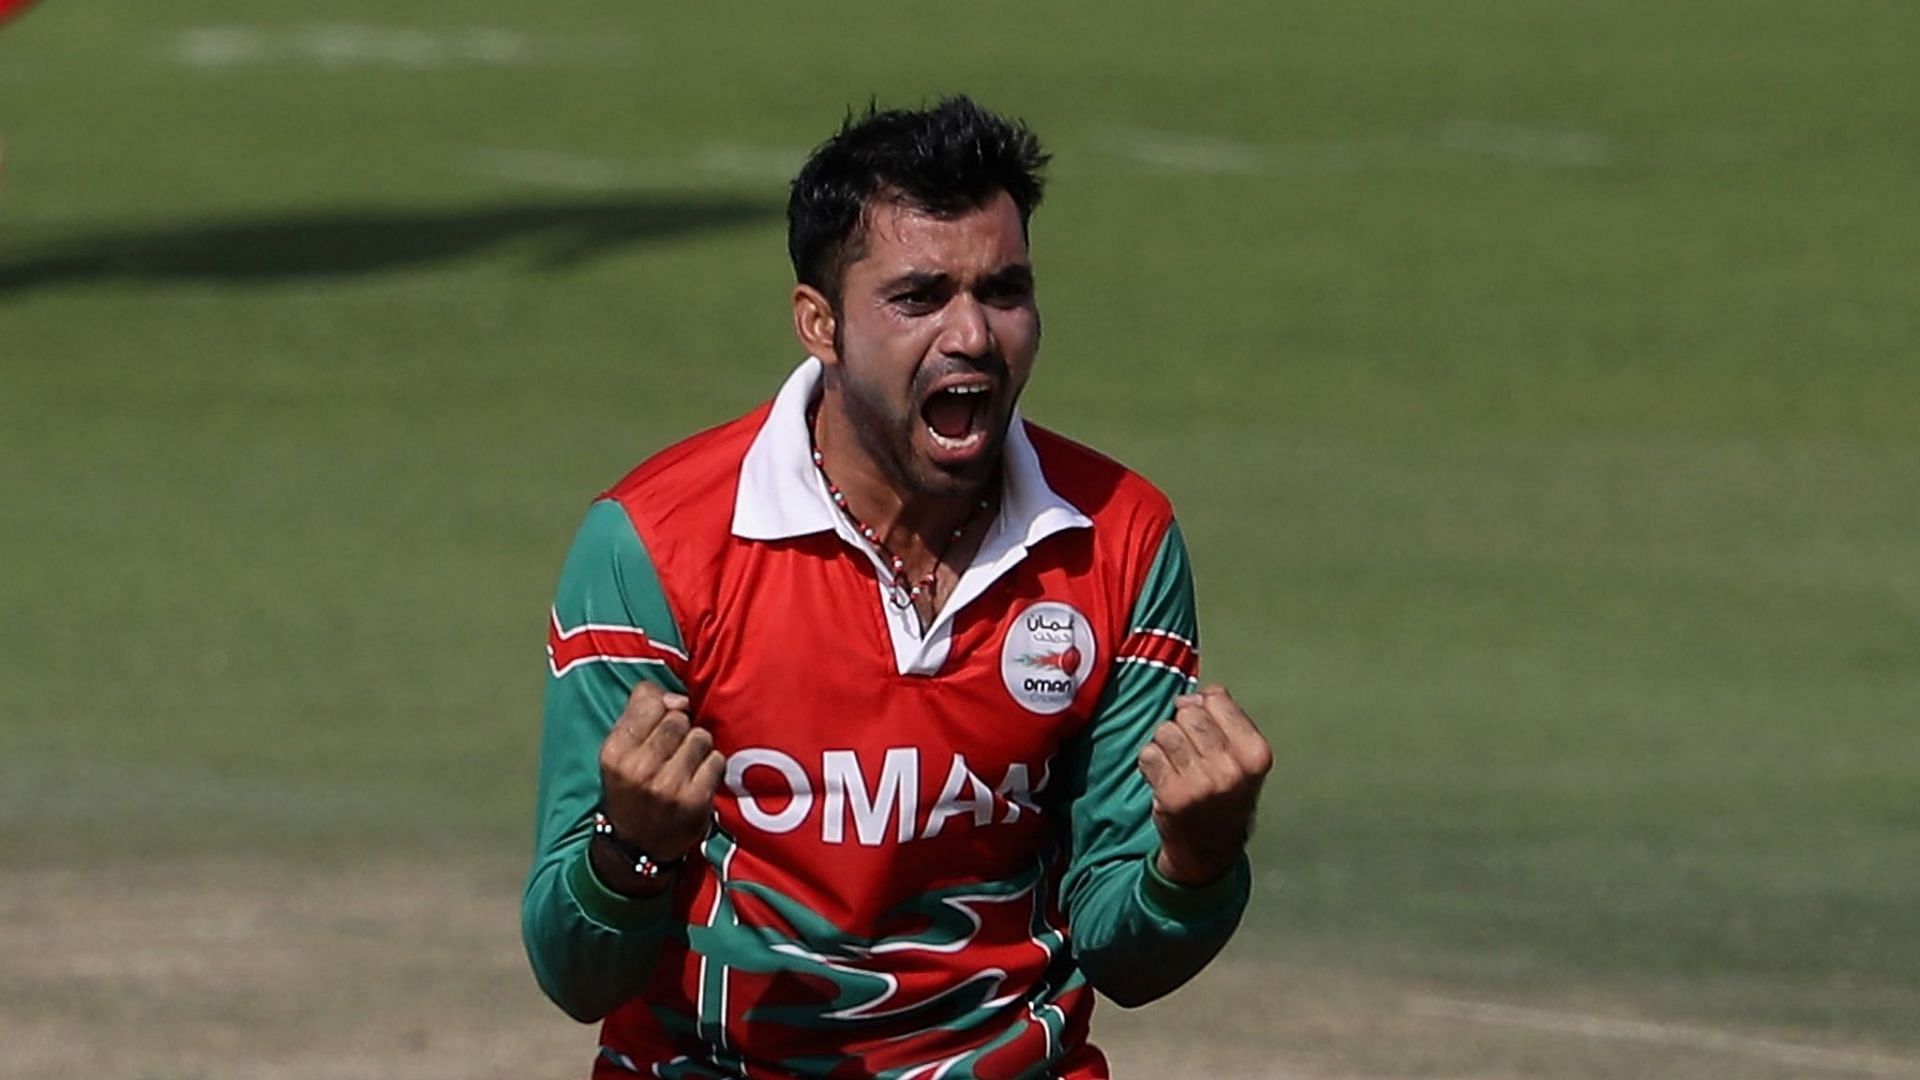 Oman Cricketer Bilal Khan (Image Courtesy: Sky Sports)